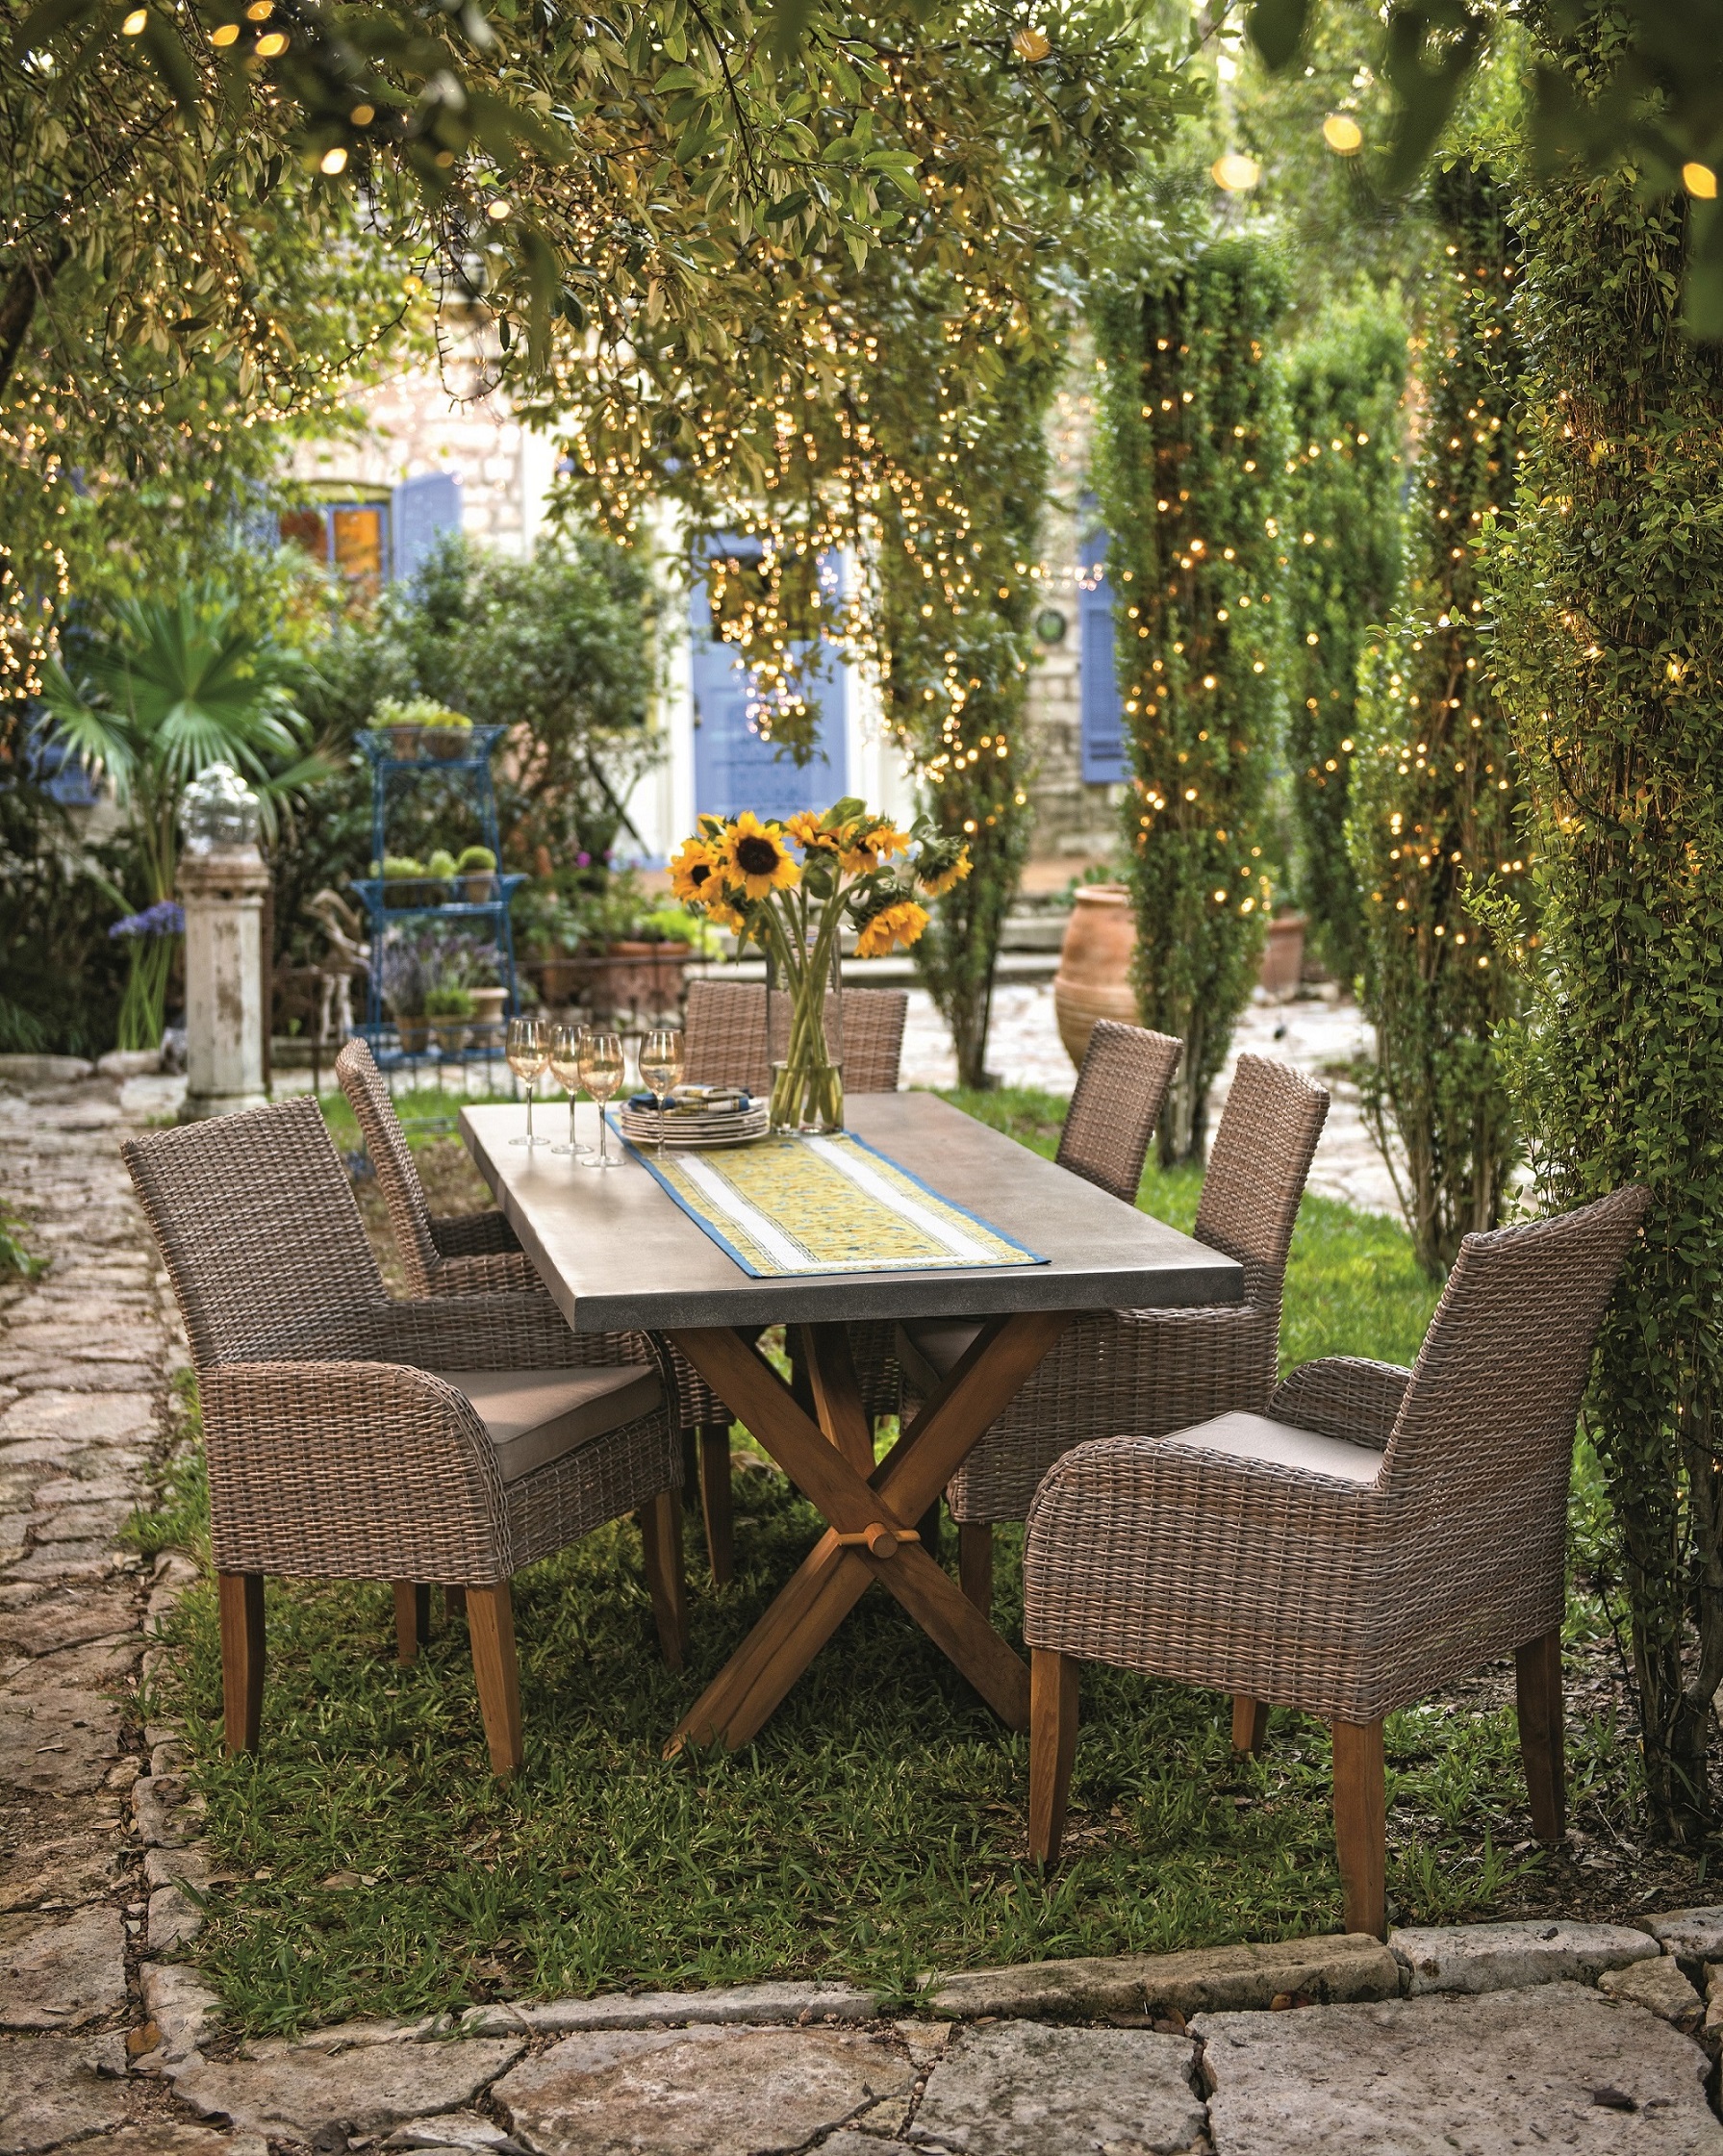 Design Outdoor Garden Rooms For All To Enjoy This Summer